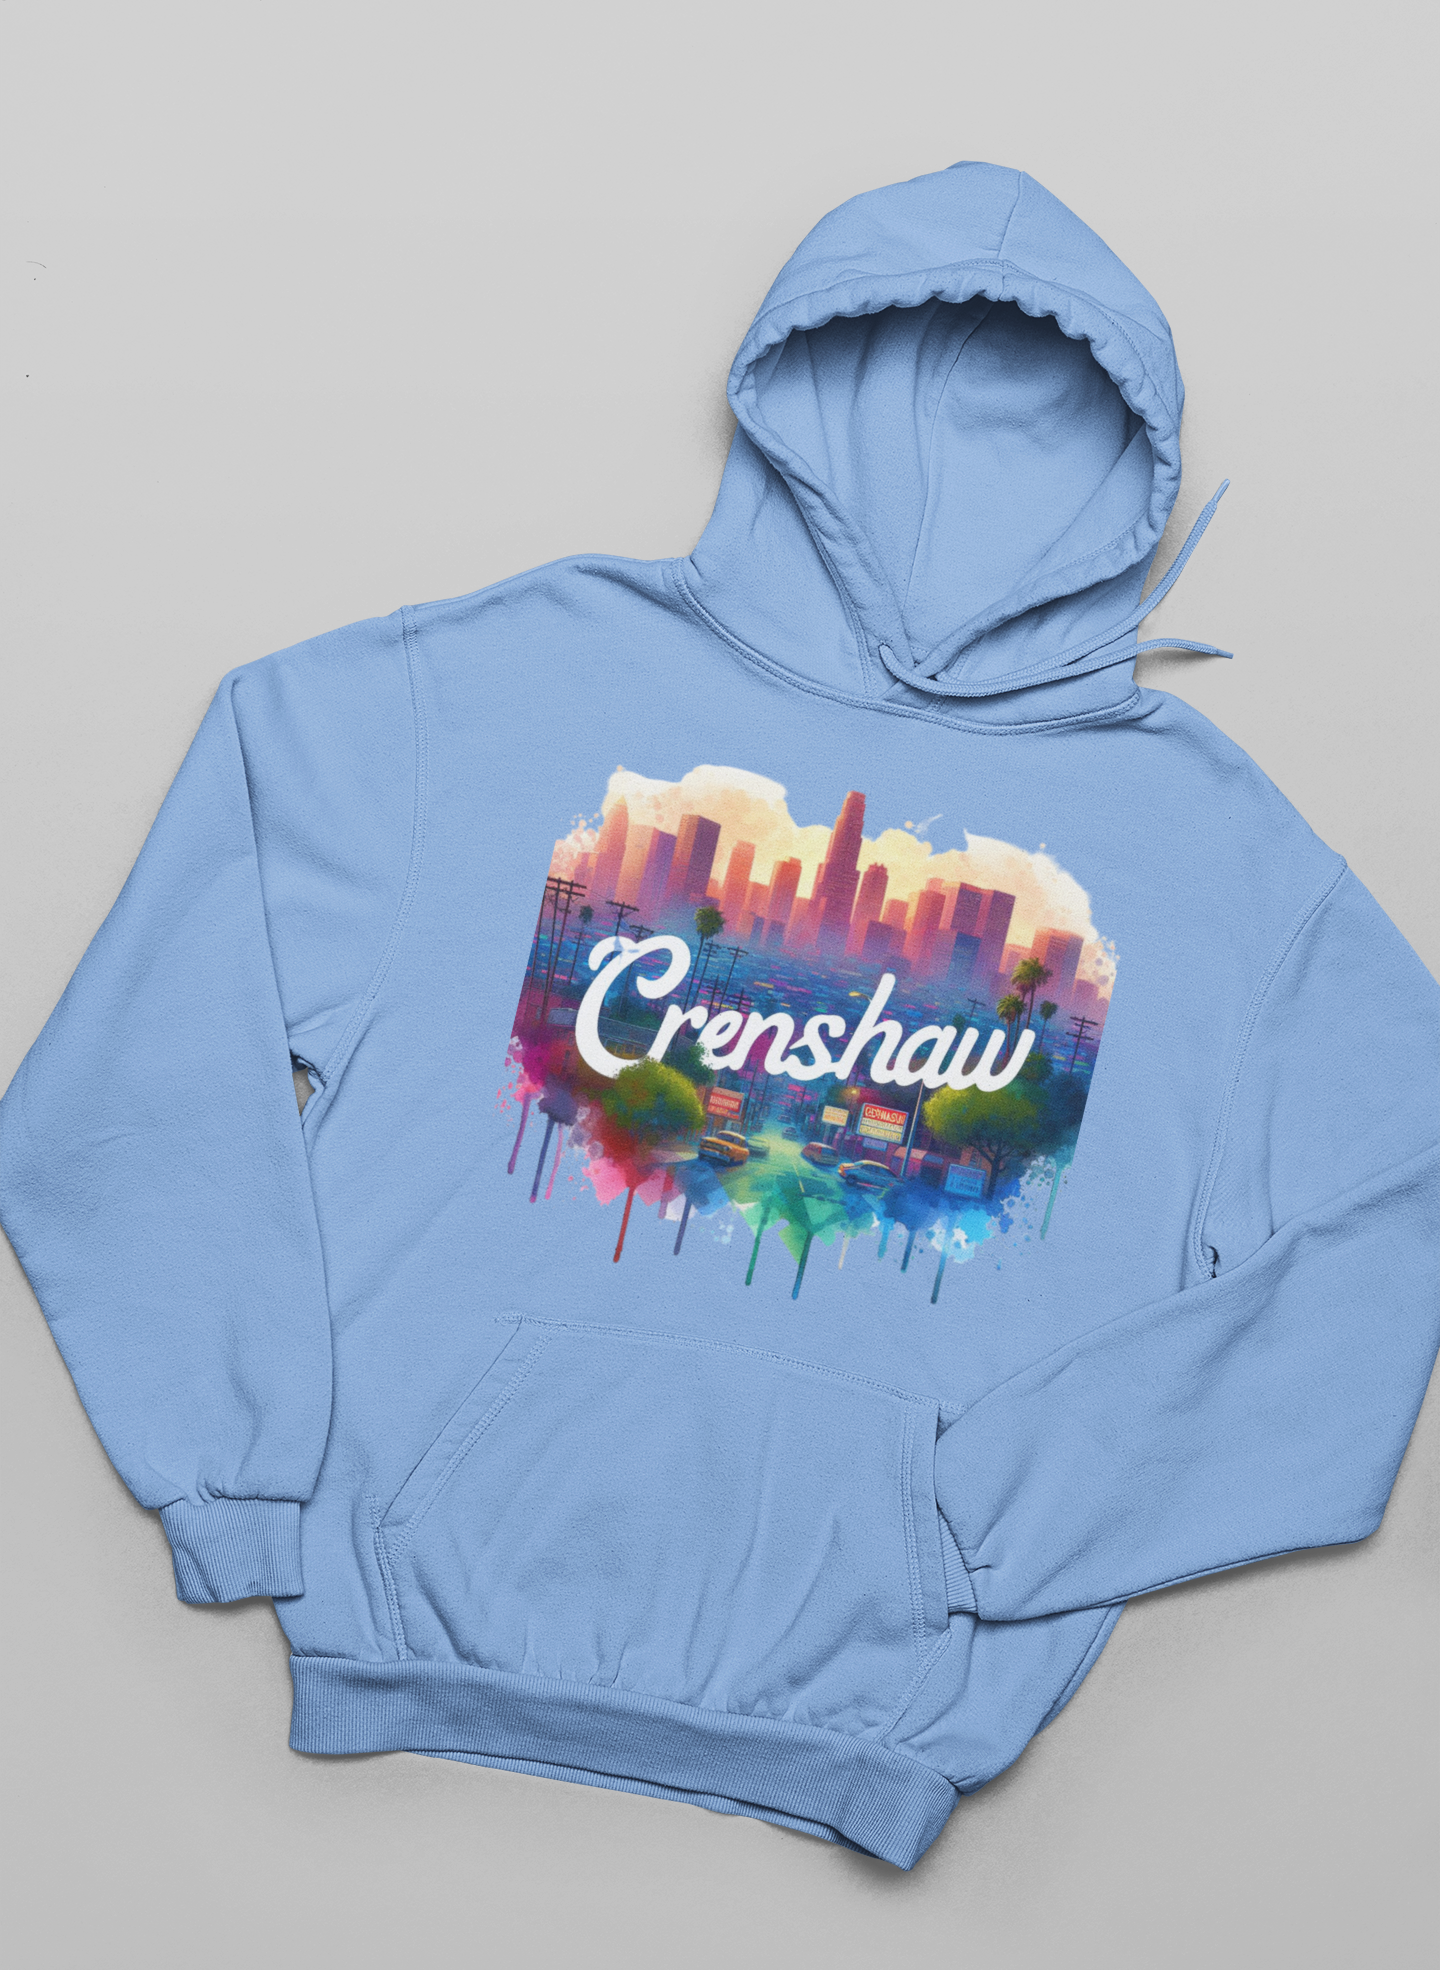 CRENSHAW ONE Hooded Sweatshirt, Back in the Day, African American Culture, Black History, Iconic Black Neighborhood, Graphic Sweatshirt, Urban Streetwear